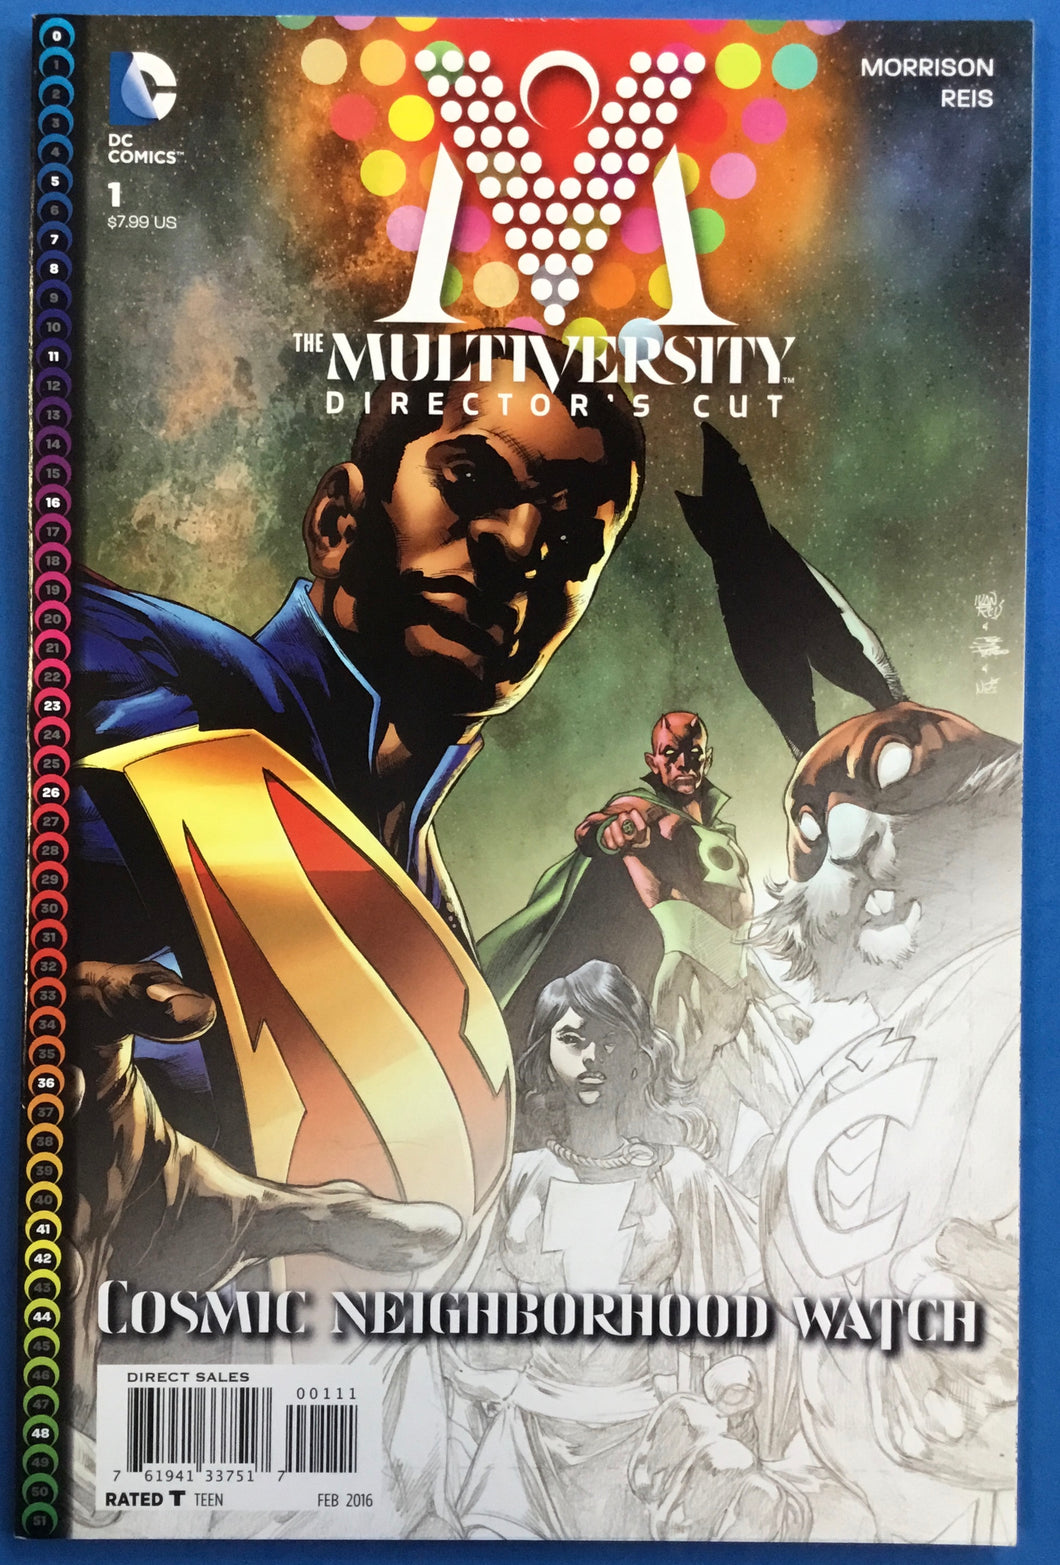 The Multiversity No. #1 The Director’s Cut 2016 DC Comics